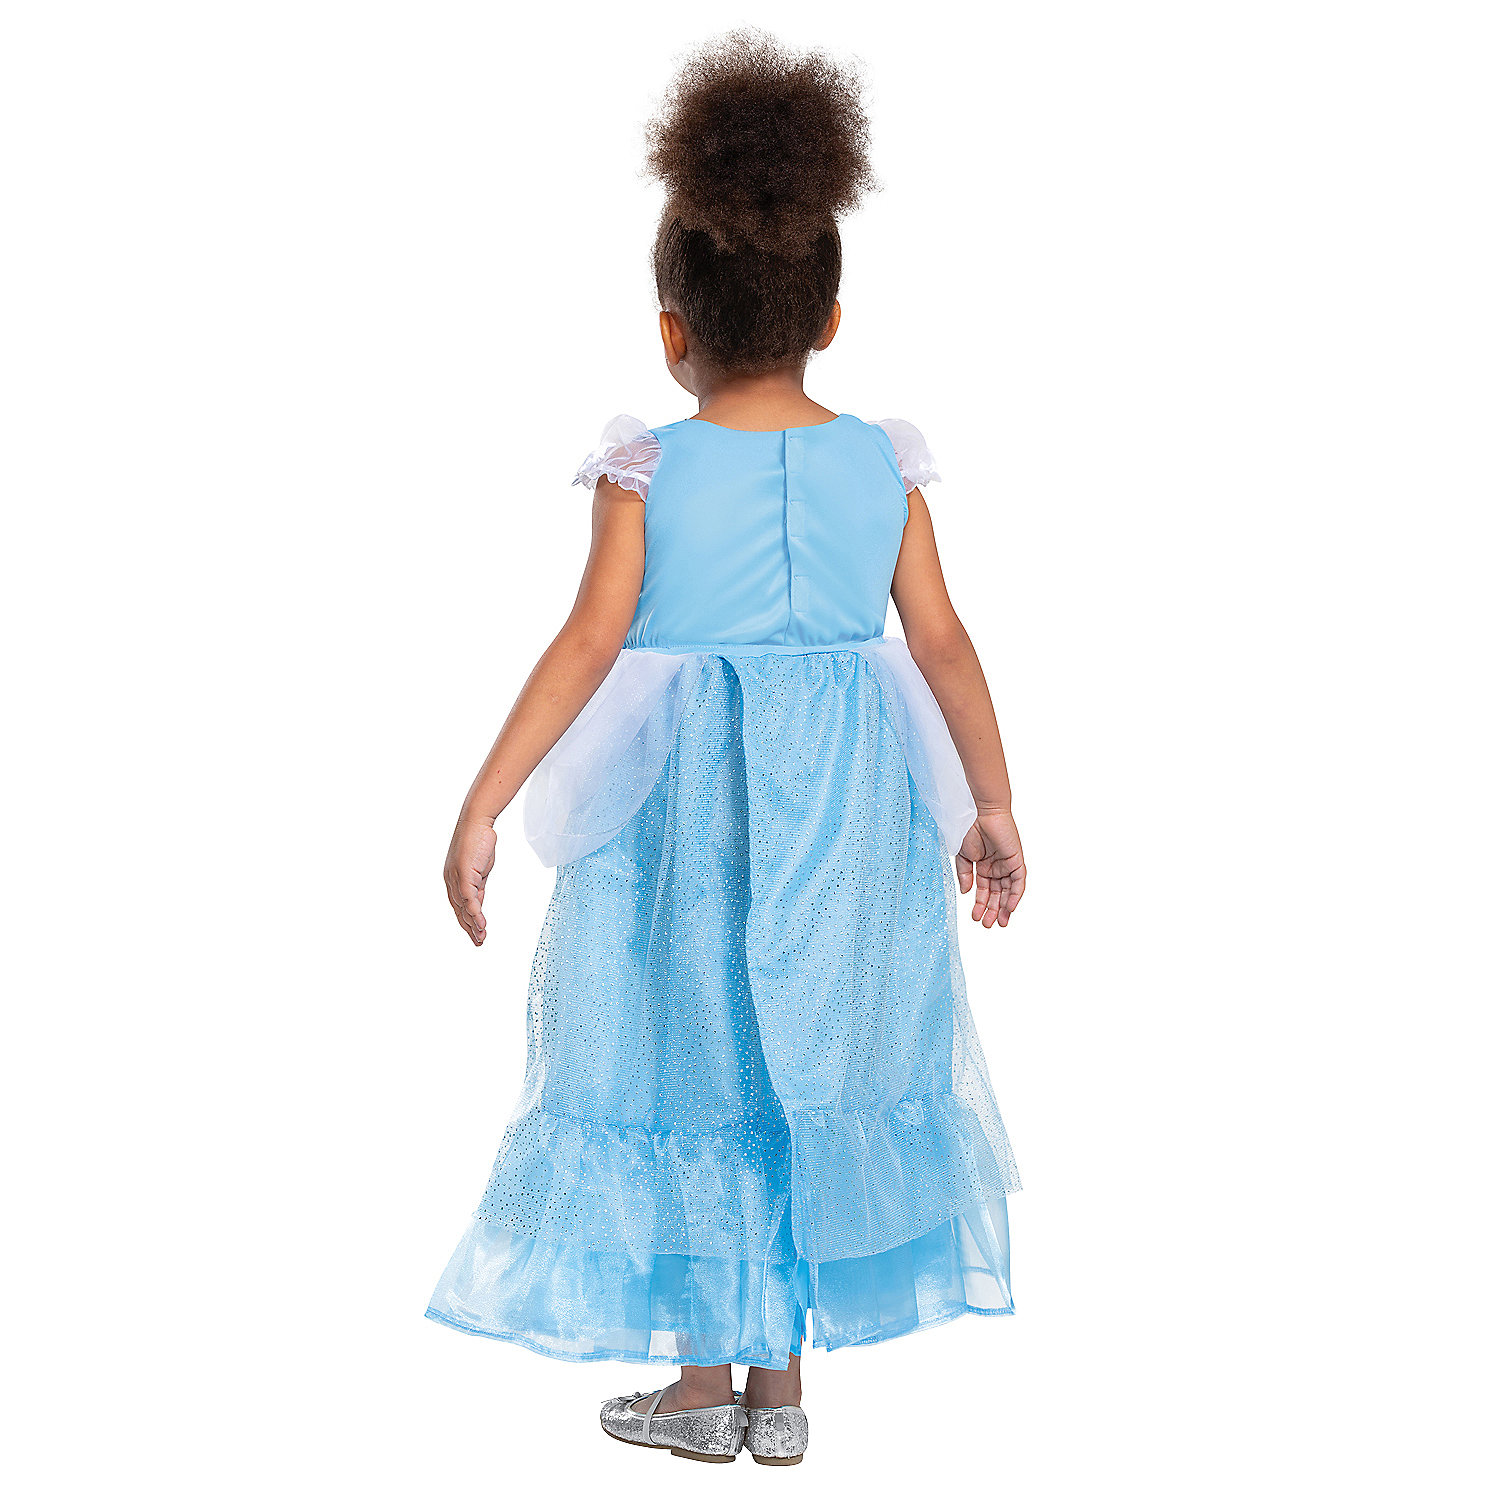 Disguise Girls' Cinderella Adaptive Costume - image 2 of 2